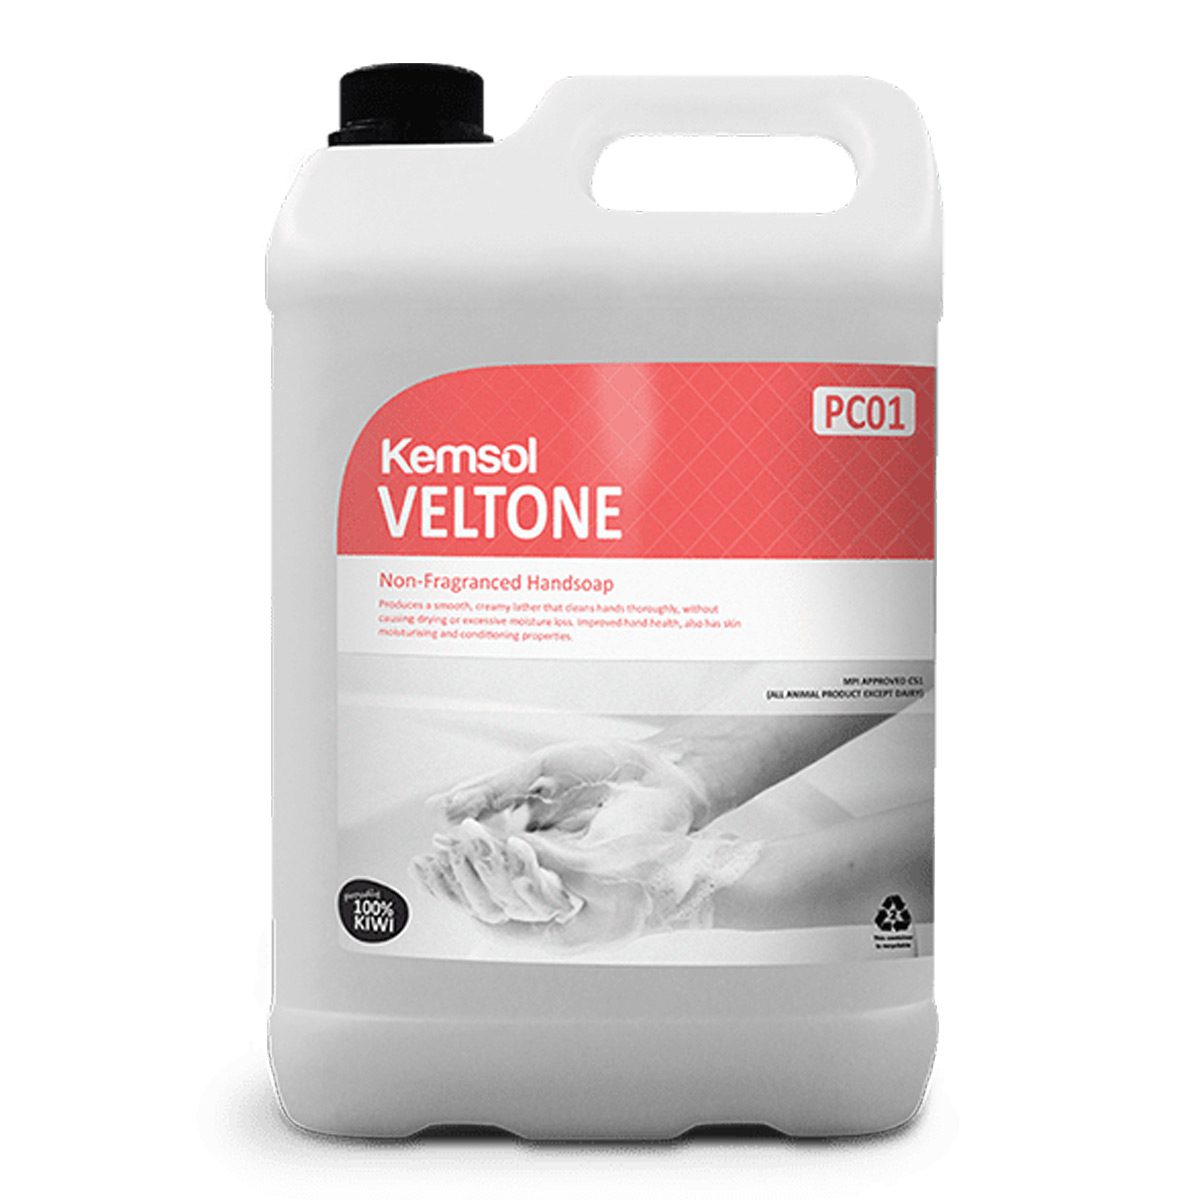 washroom-skincare-hand-soap-kemsol-veltone-hand-soap-smooth-creamy-lather-cleans-hands-thoroughly-improves-hand-health-skin-moisturising-conditioning properties-vjs-distributors-KVELTONESKU